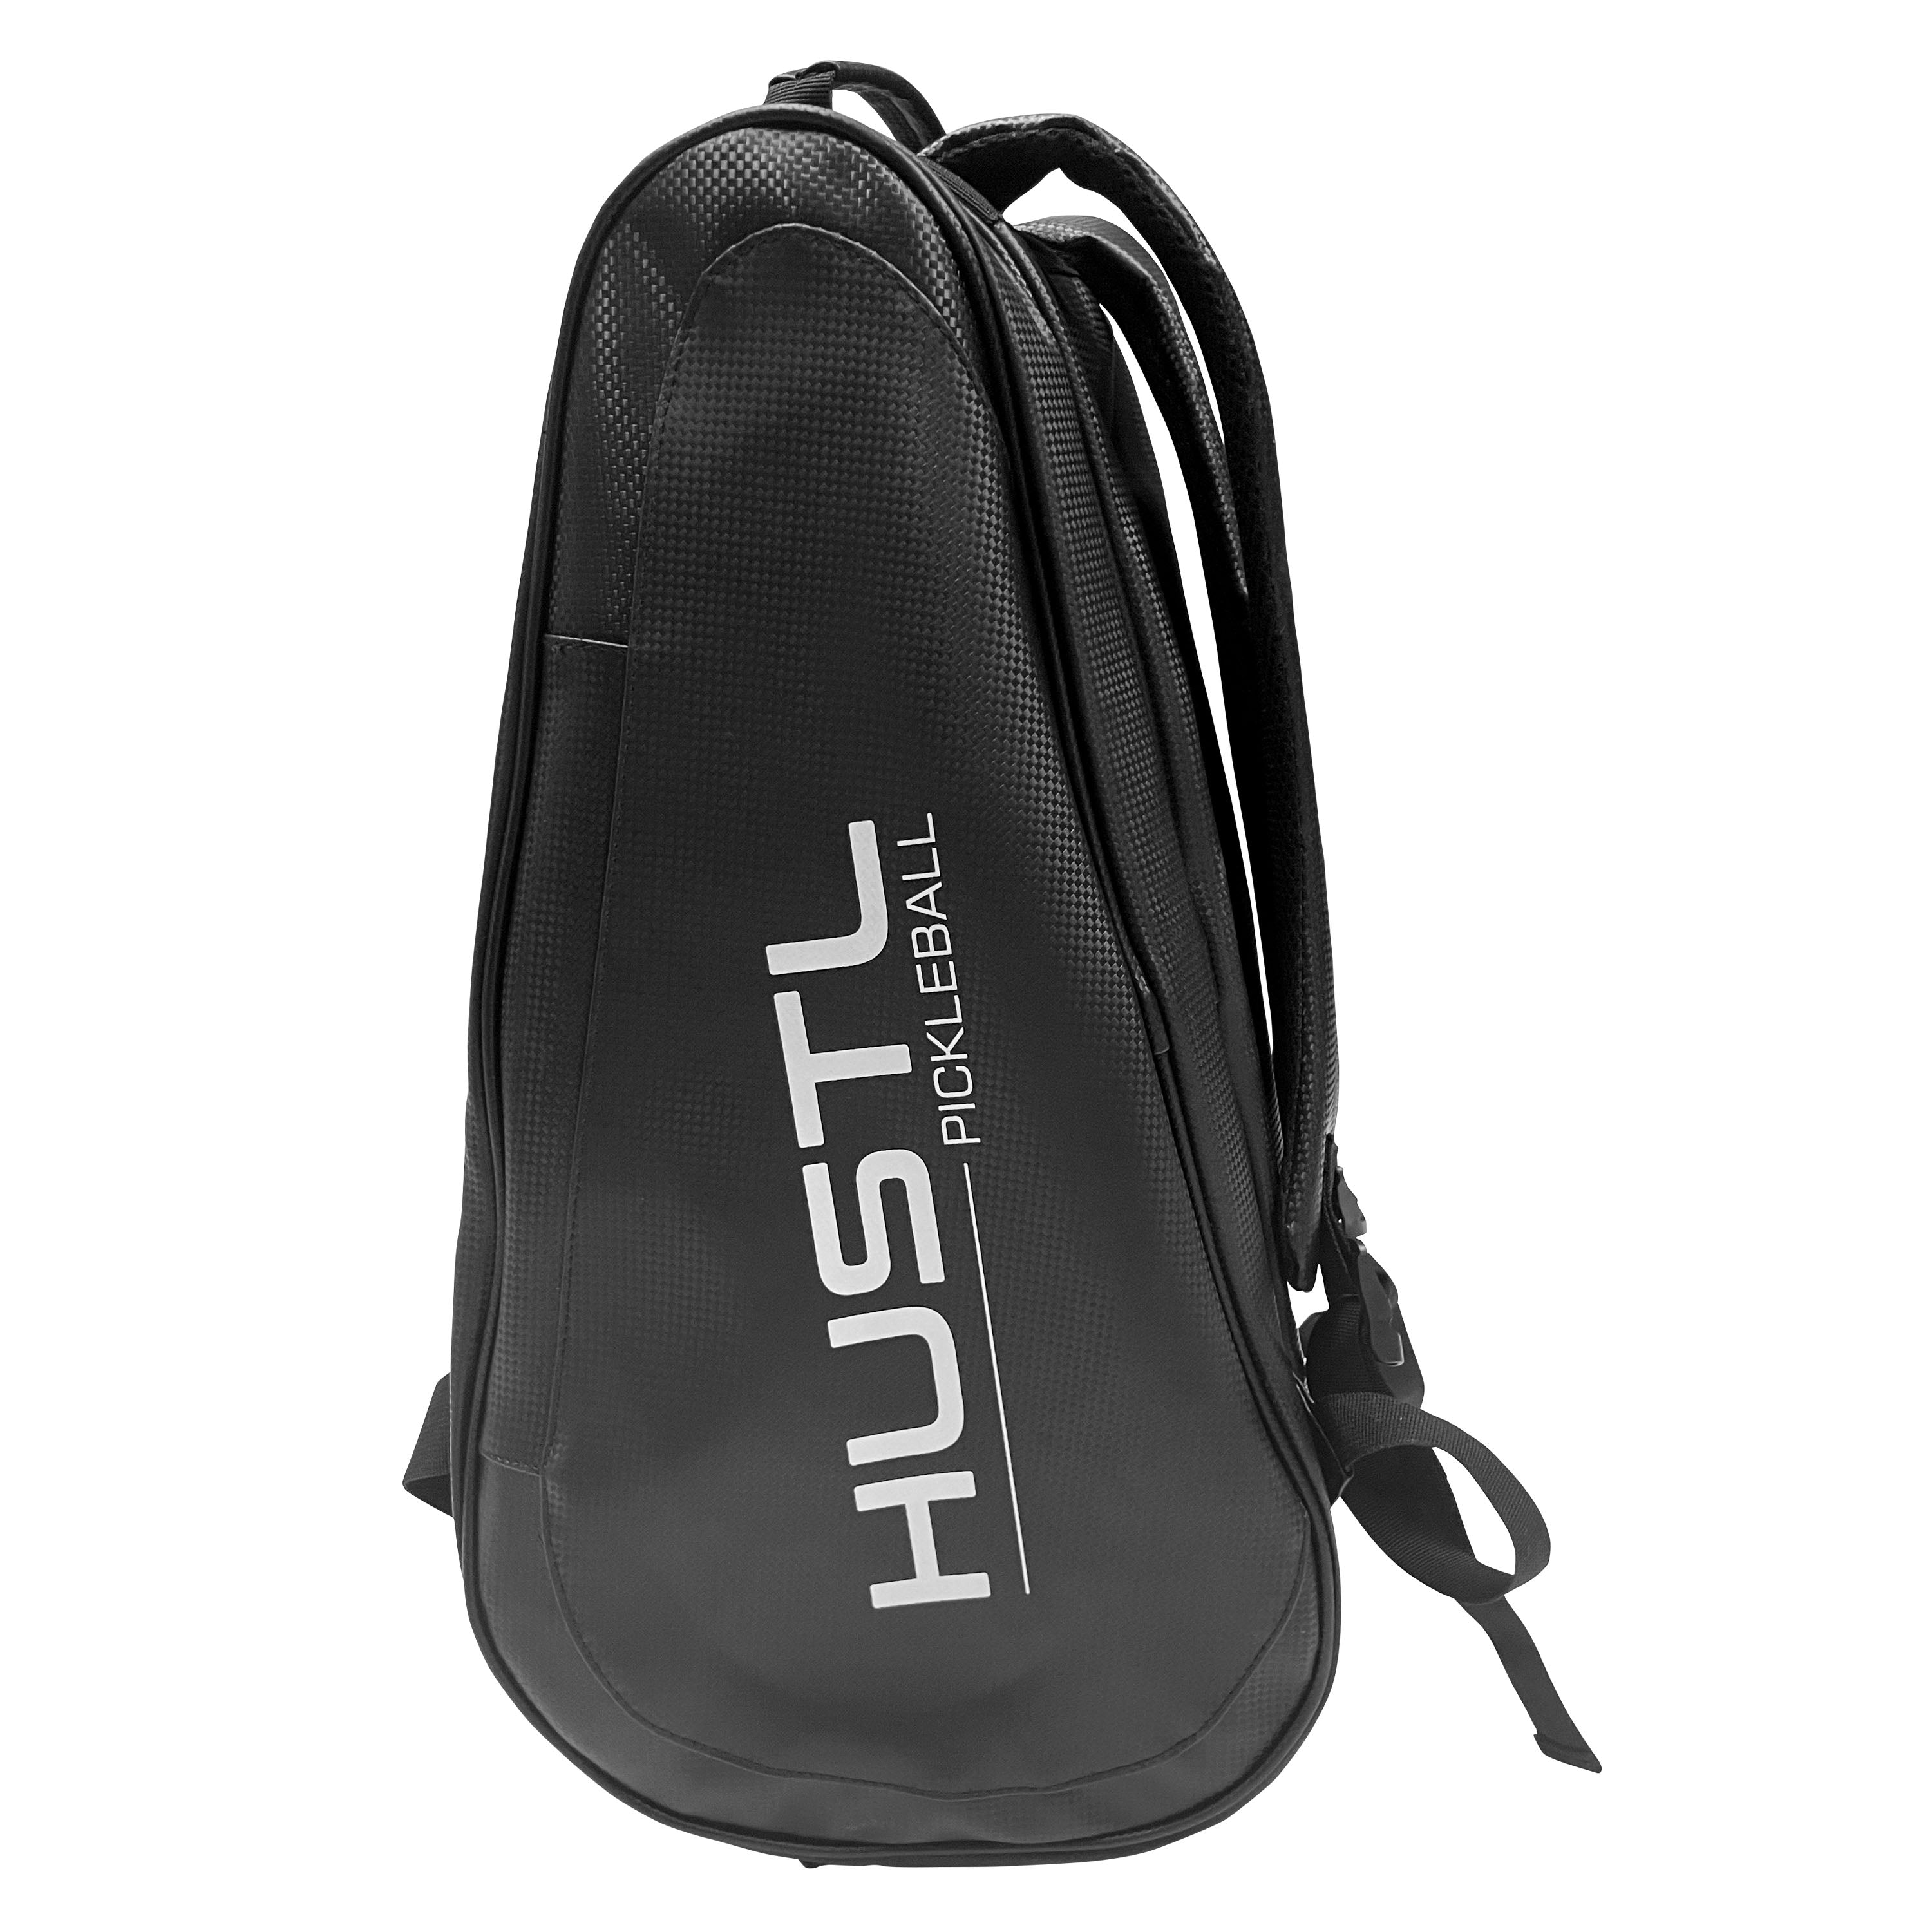 HUSTL Pro Team Tour Bag